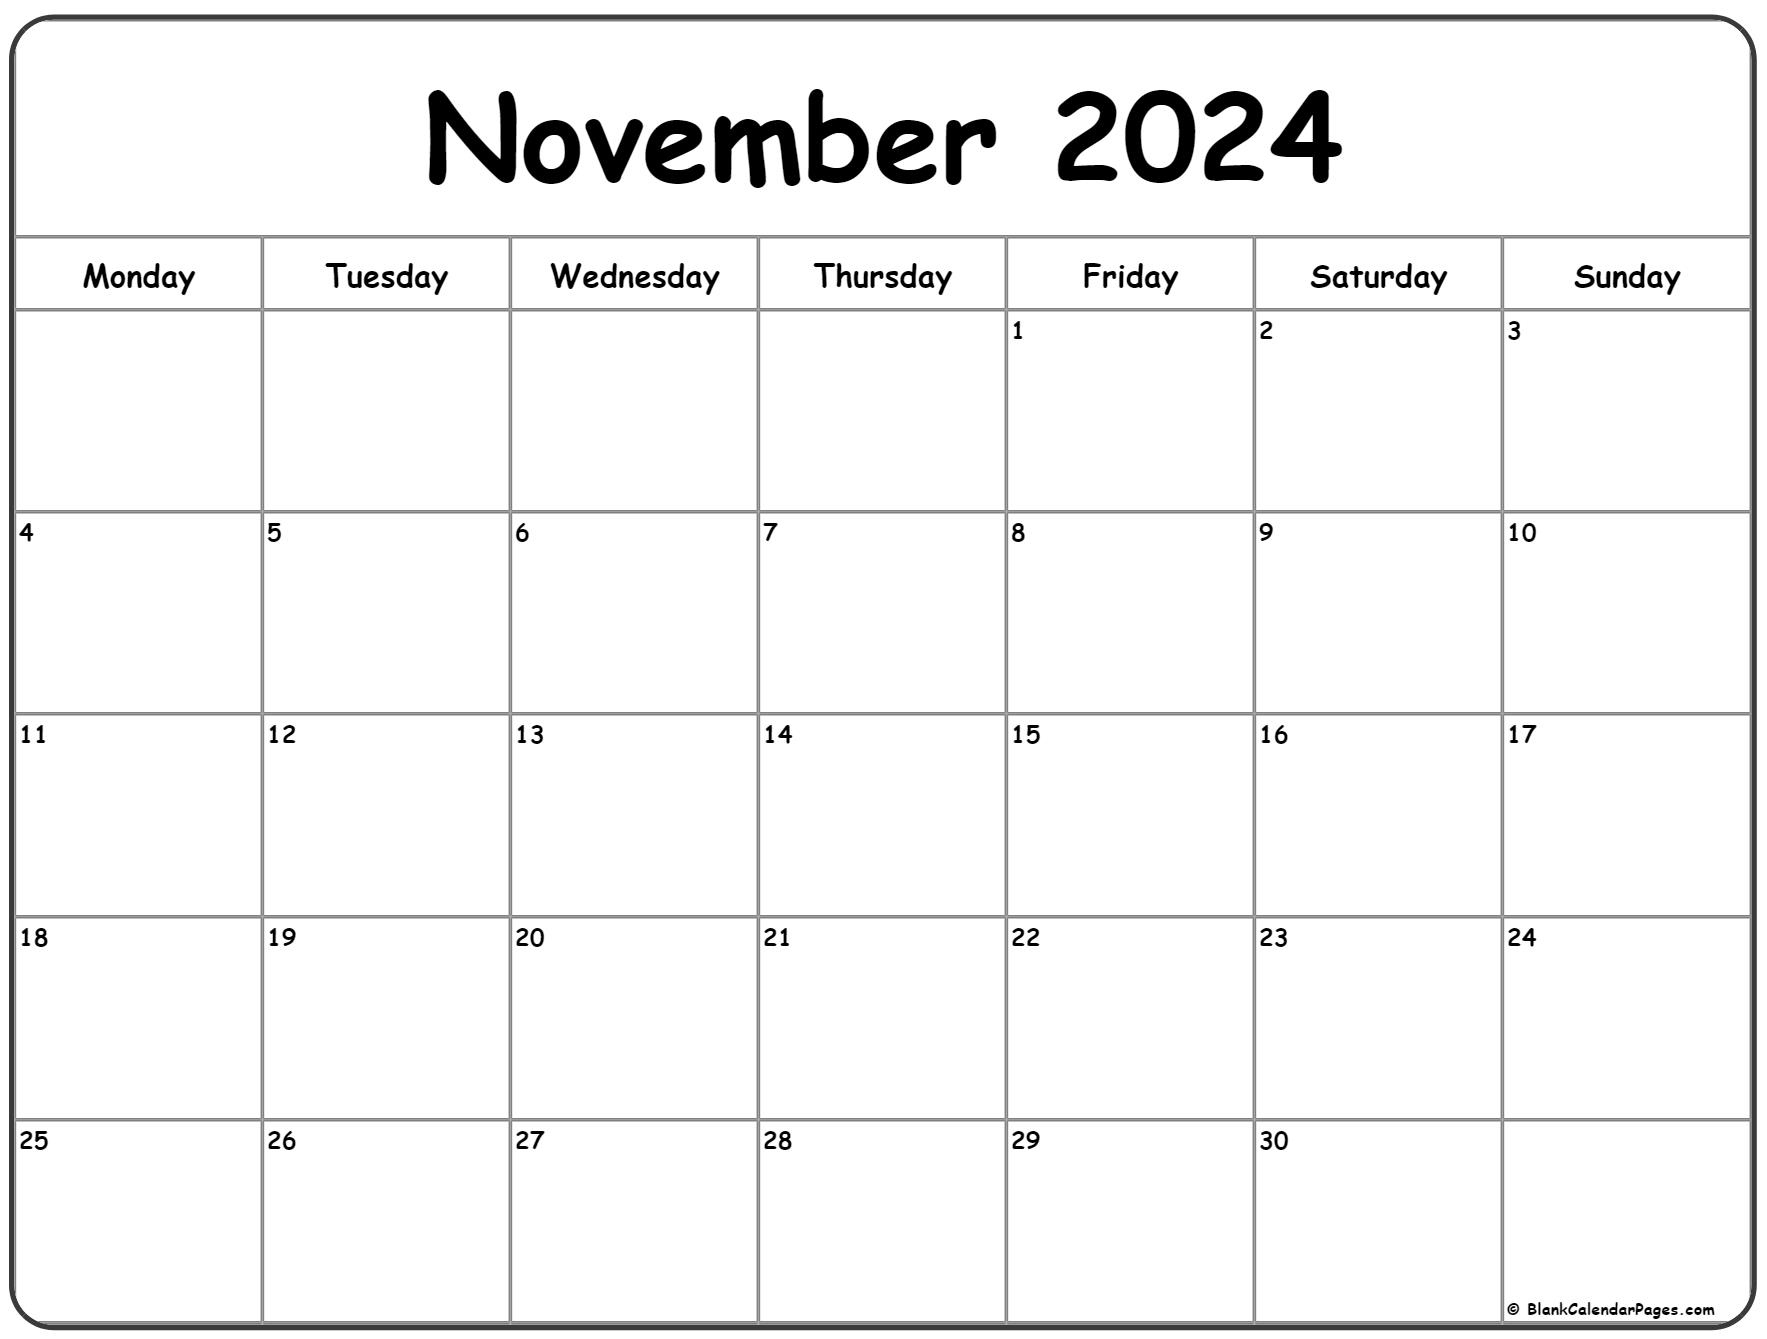 November 2024 Monday Calendar | Monday To Sunday with Free Printable Blank Calendar November 2024